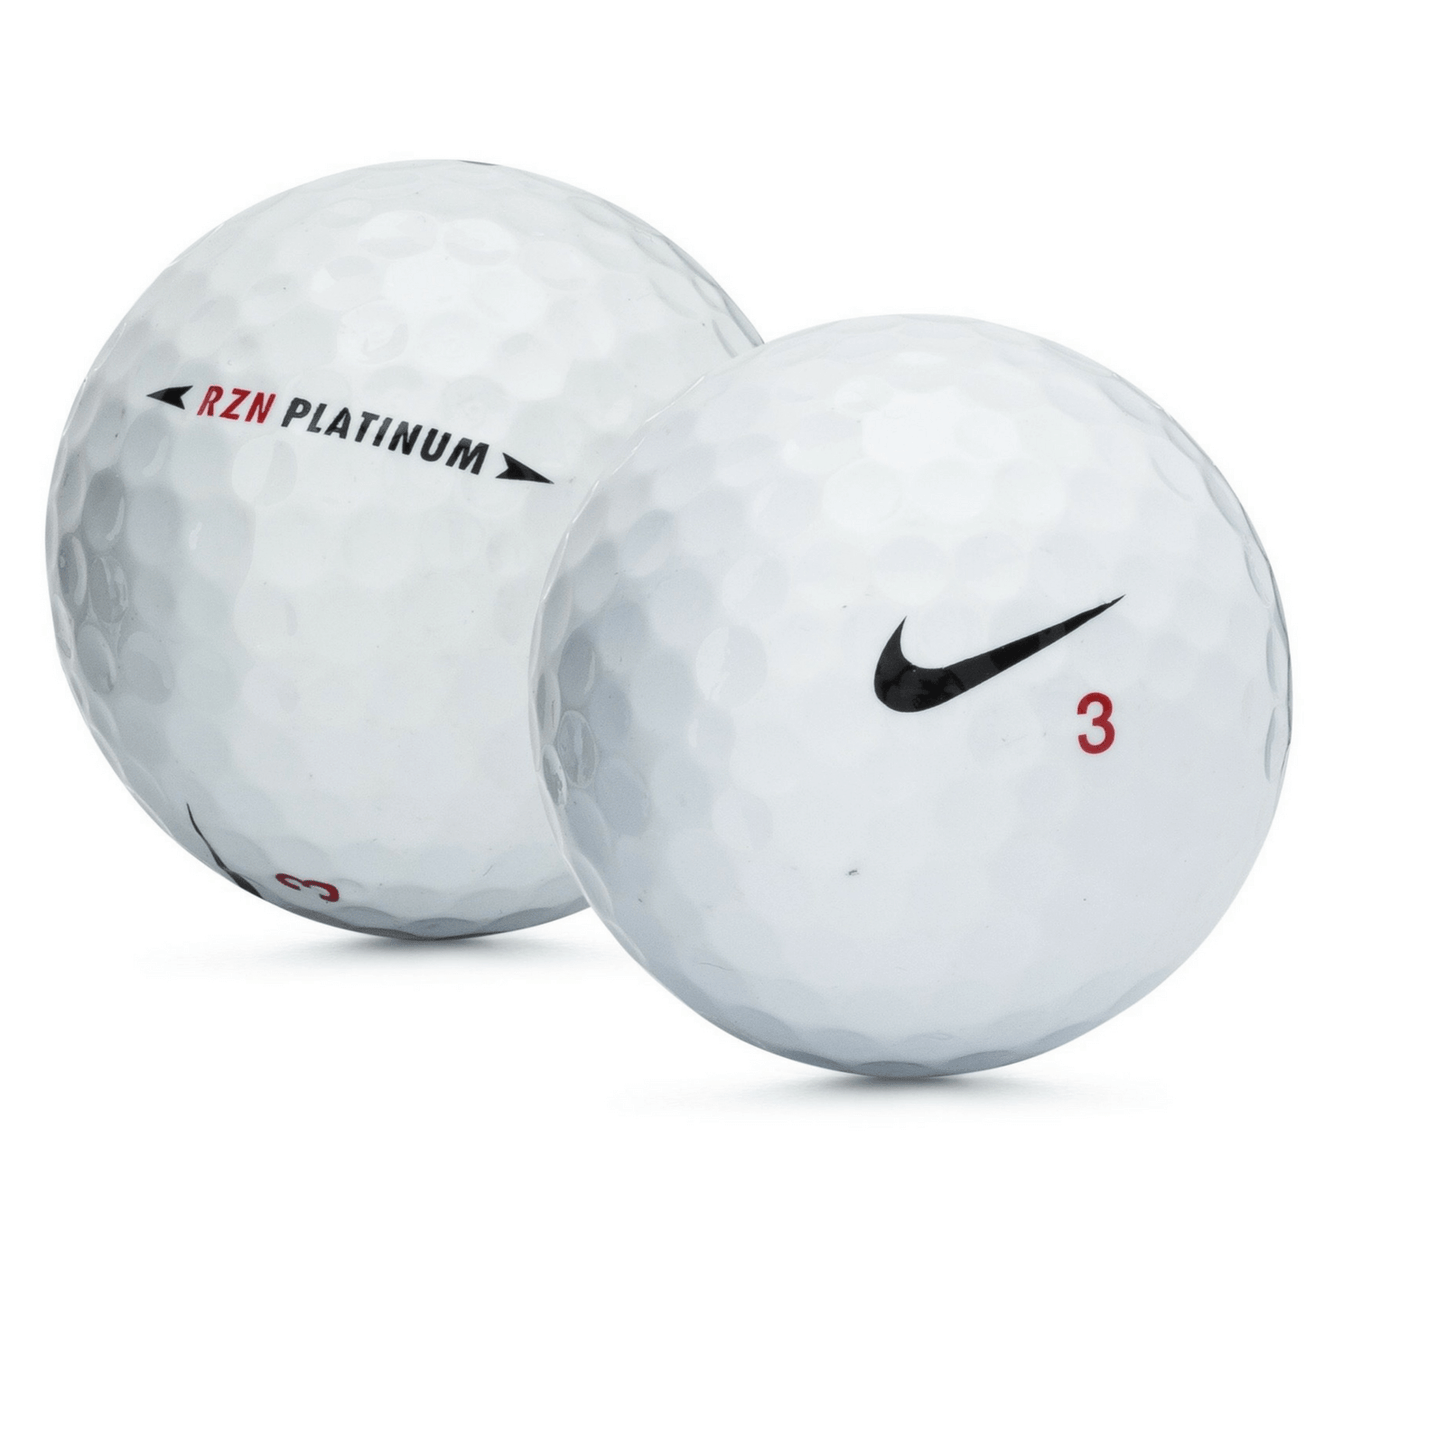 Used Nike RZN Platinum Golf Balls - 1 Dozen